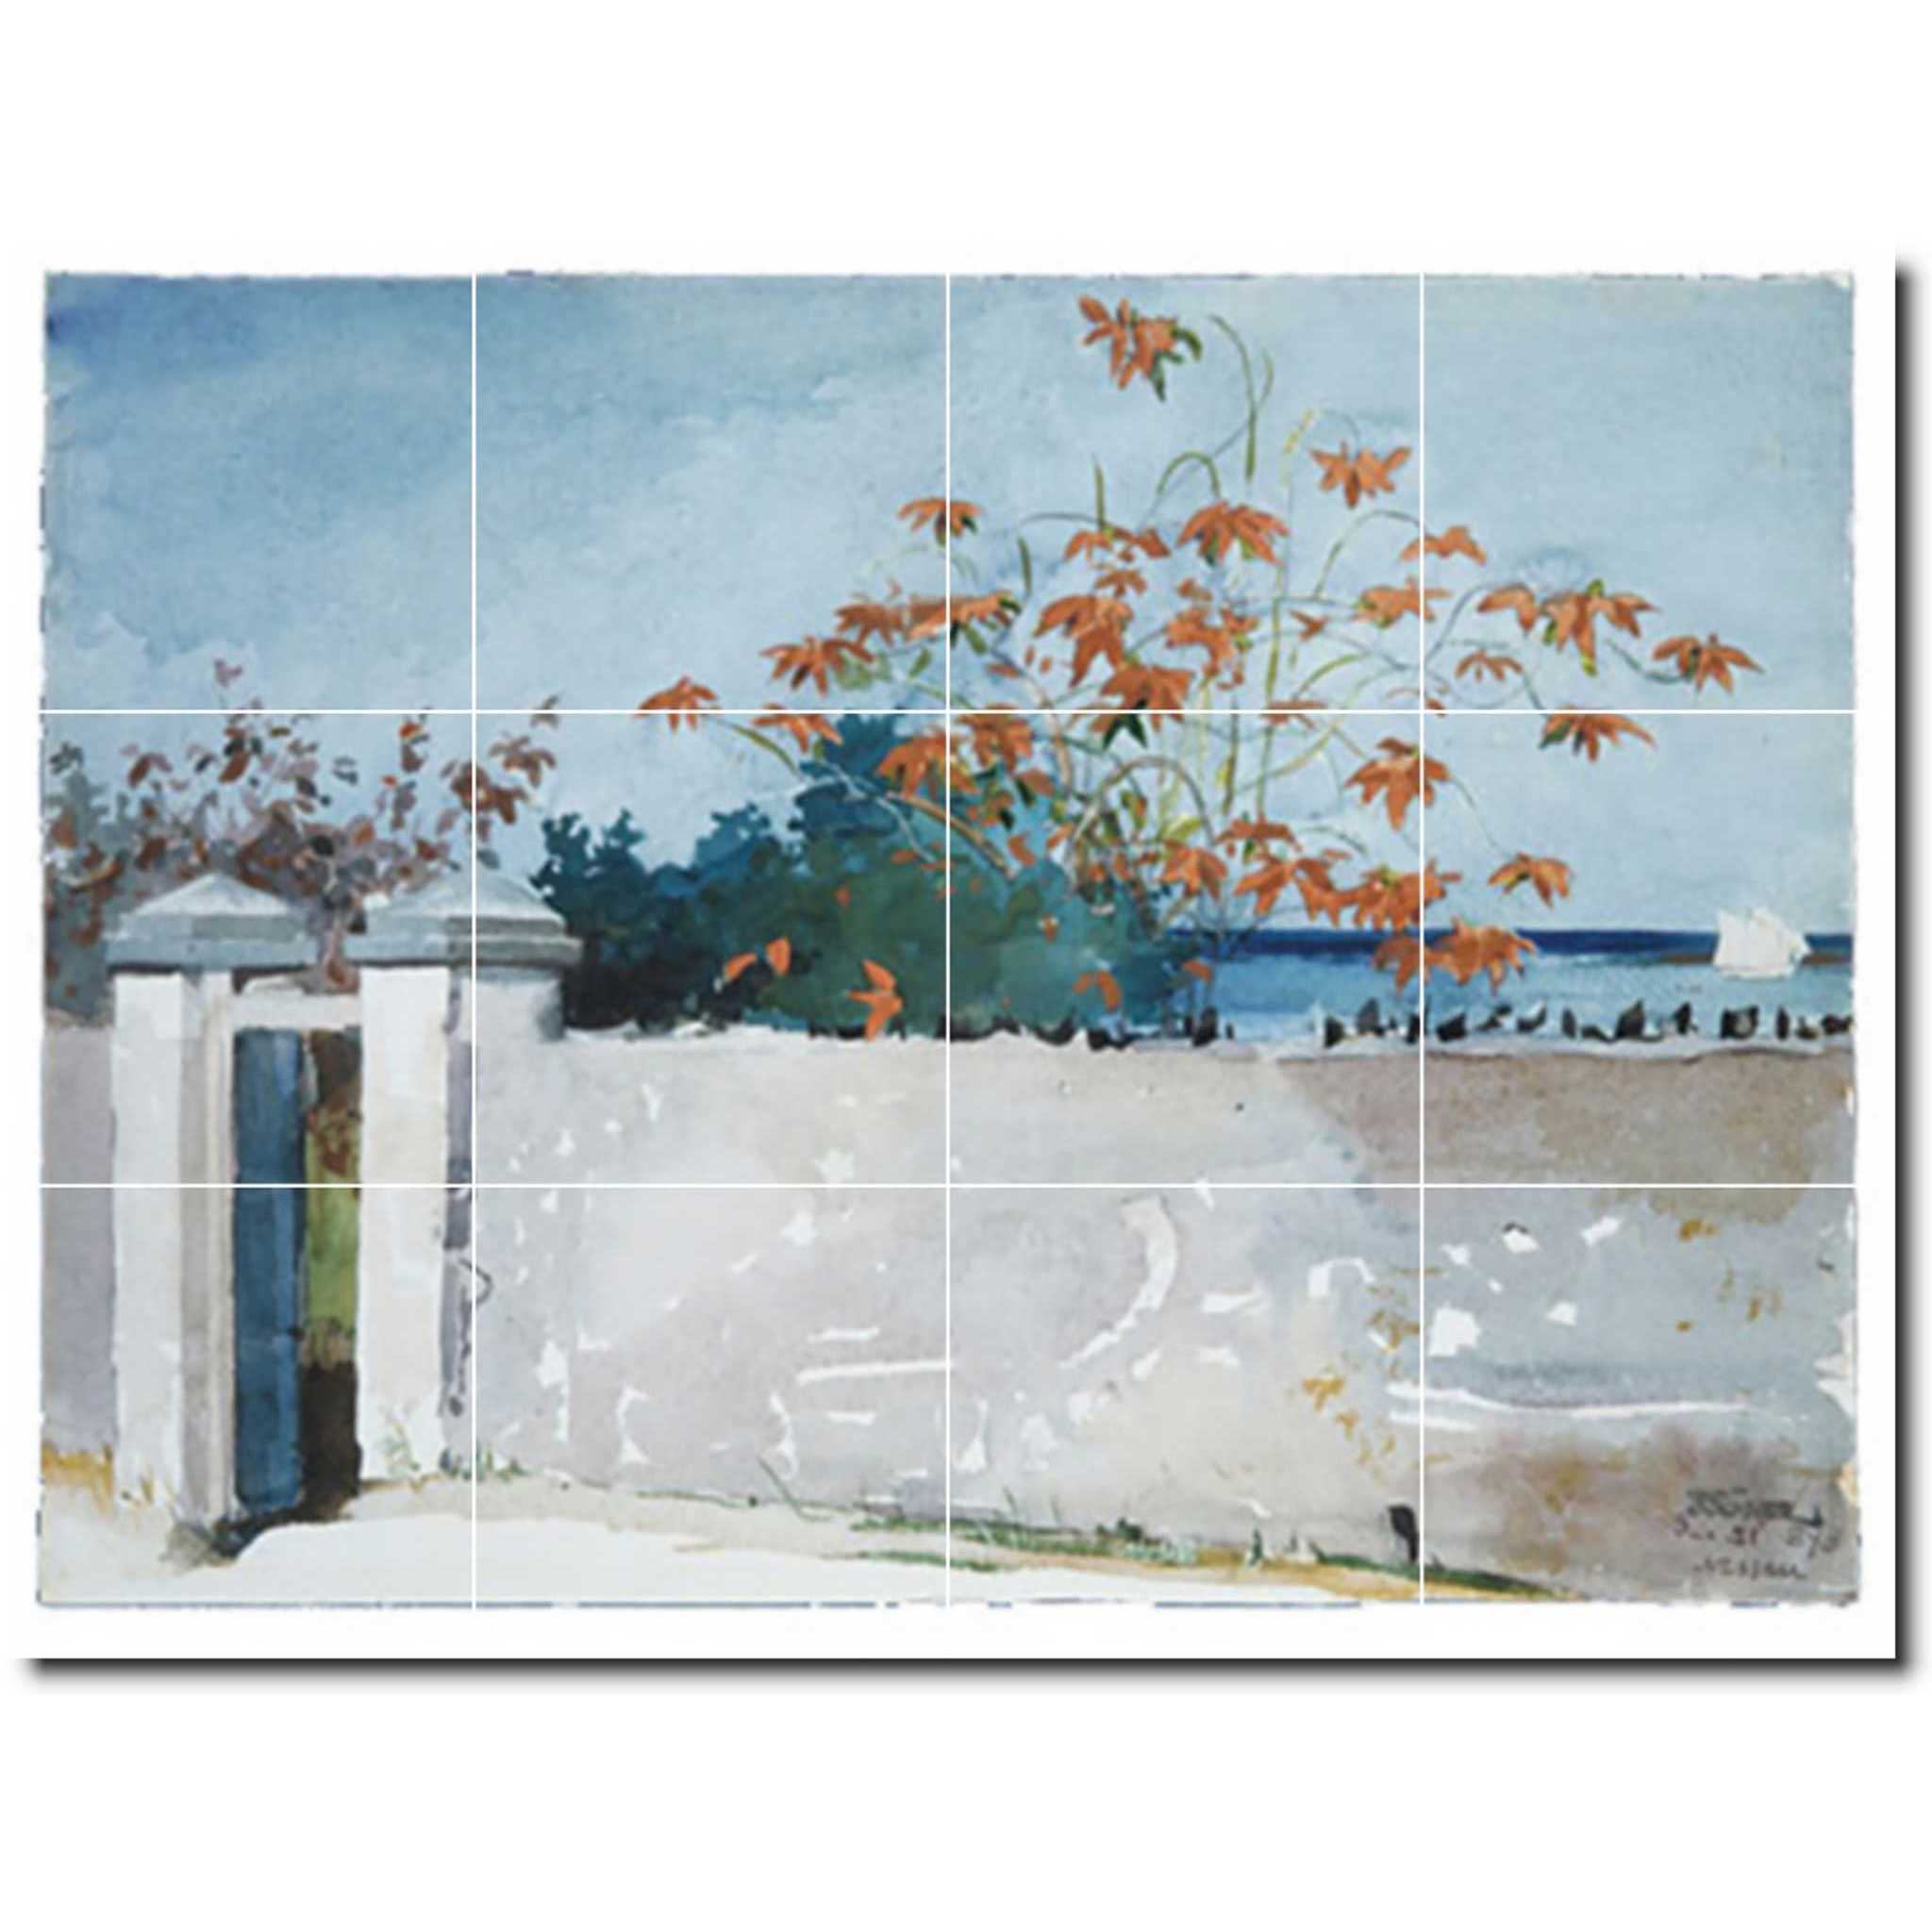 Winslow Homer Village Painting Ceramic Tile Mural P04328-XL. 48"W x 36"H (12) 12x12 tiles